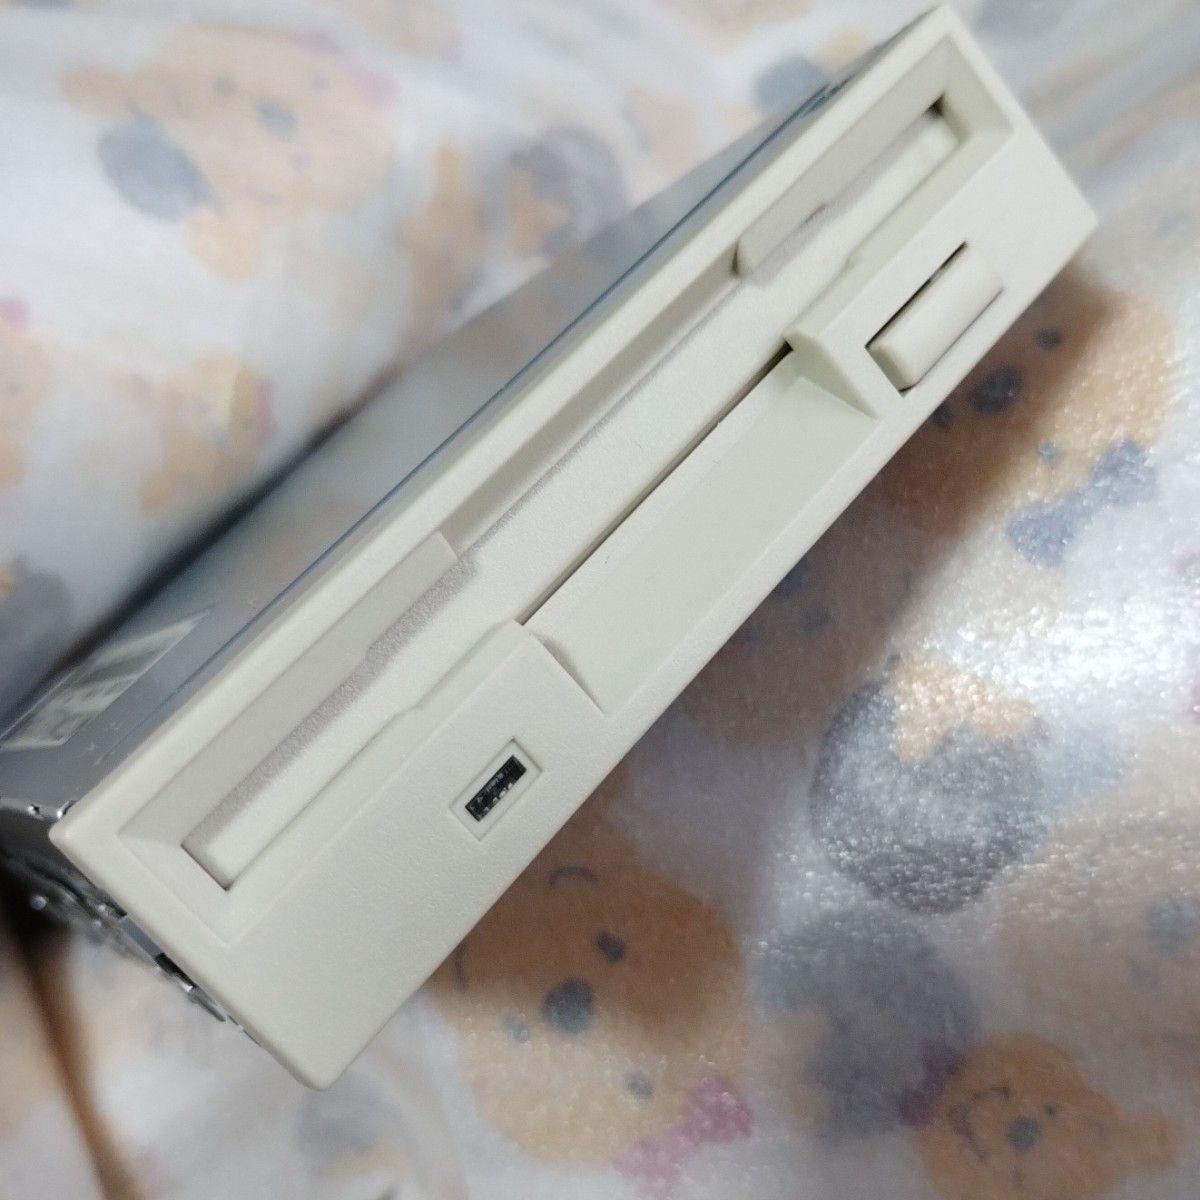 MITSUMI・フロッピーディスクドライブ「D353M3D」★新品・未使用